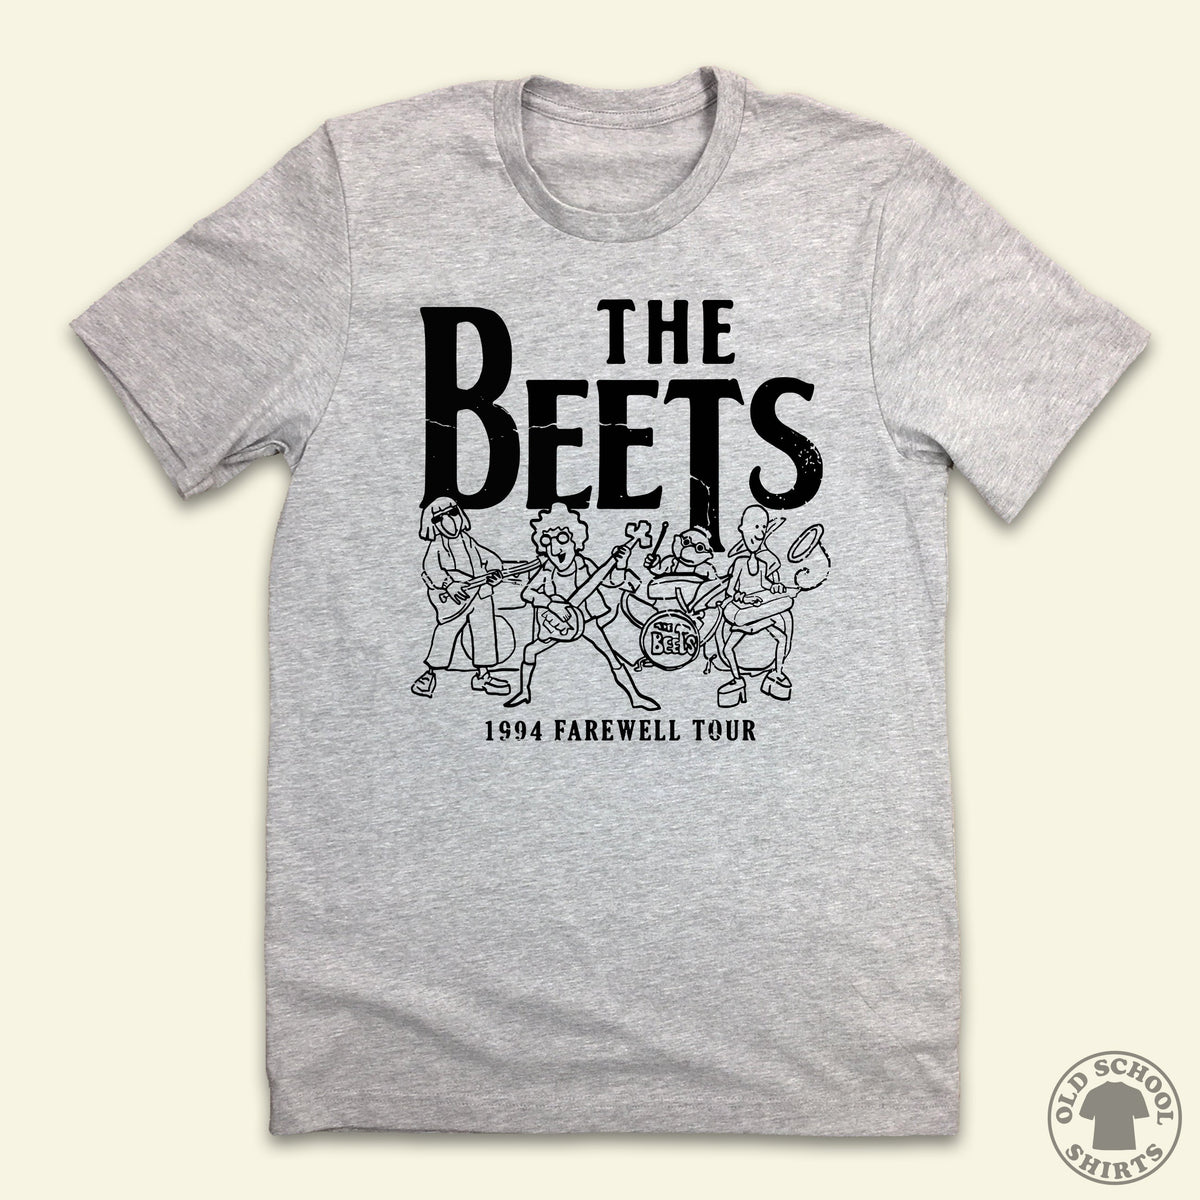 The Beets Farewell Tour T-shirt Doug TV series